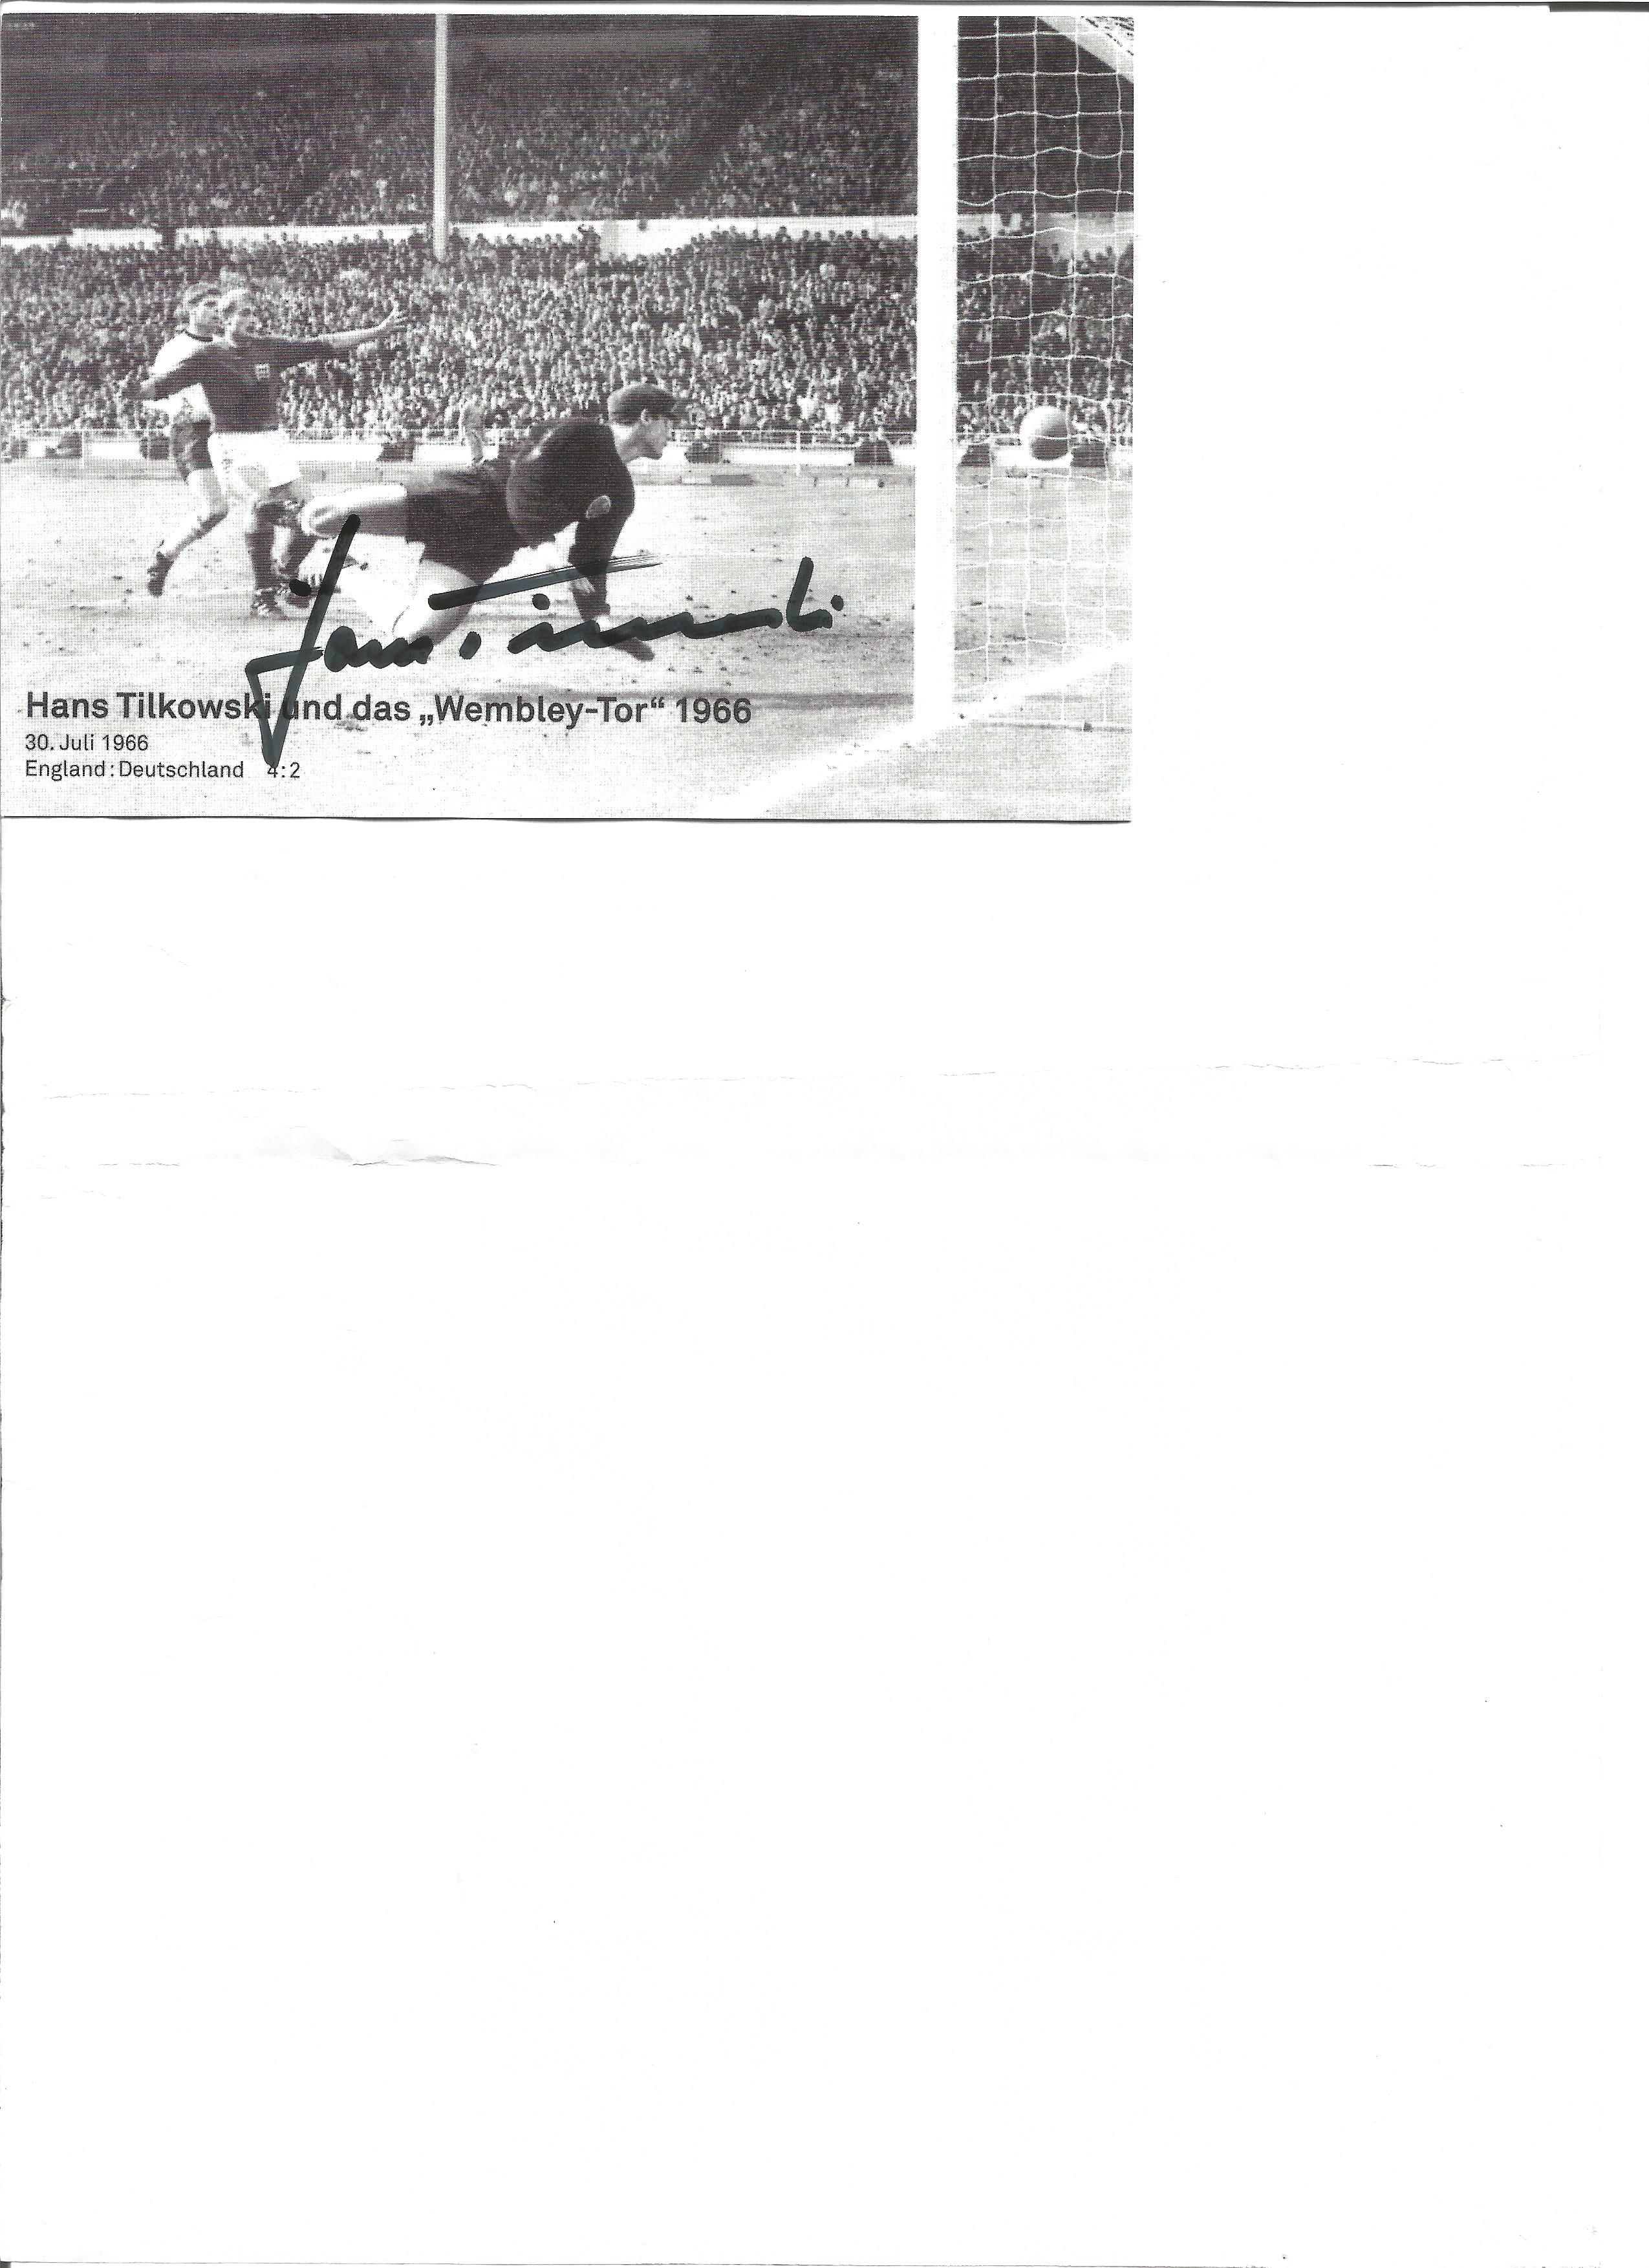 Football Autographed Hans Tilkowski Photo-Card, Depicting A Superb Image Showing The German